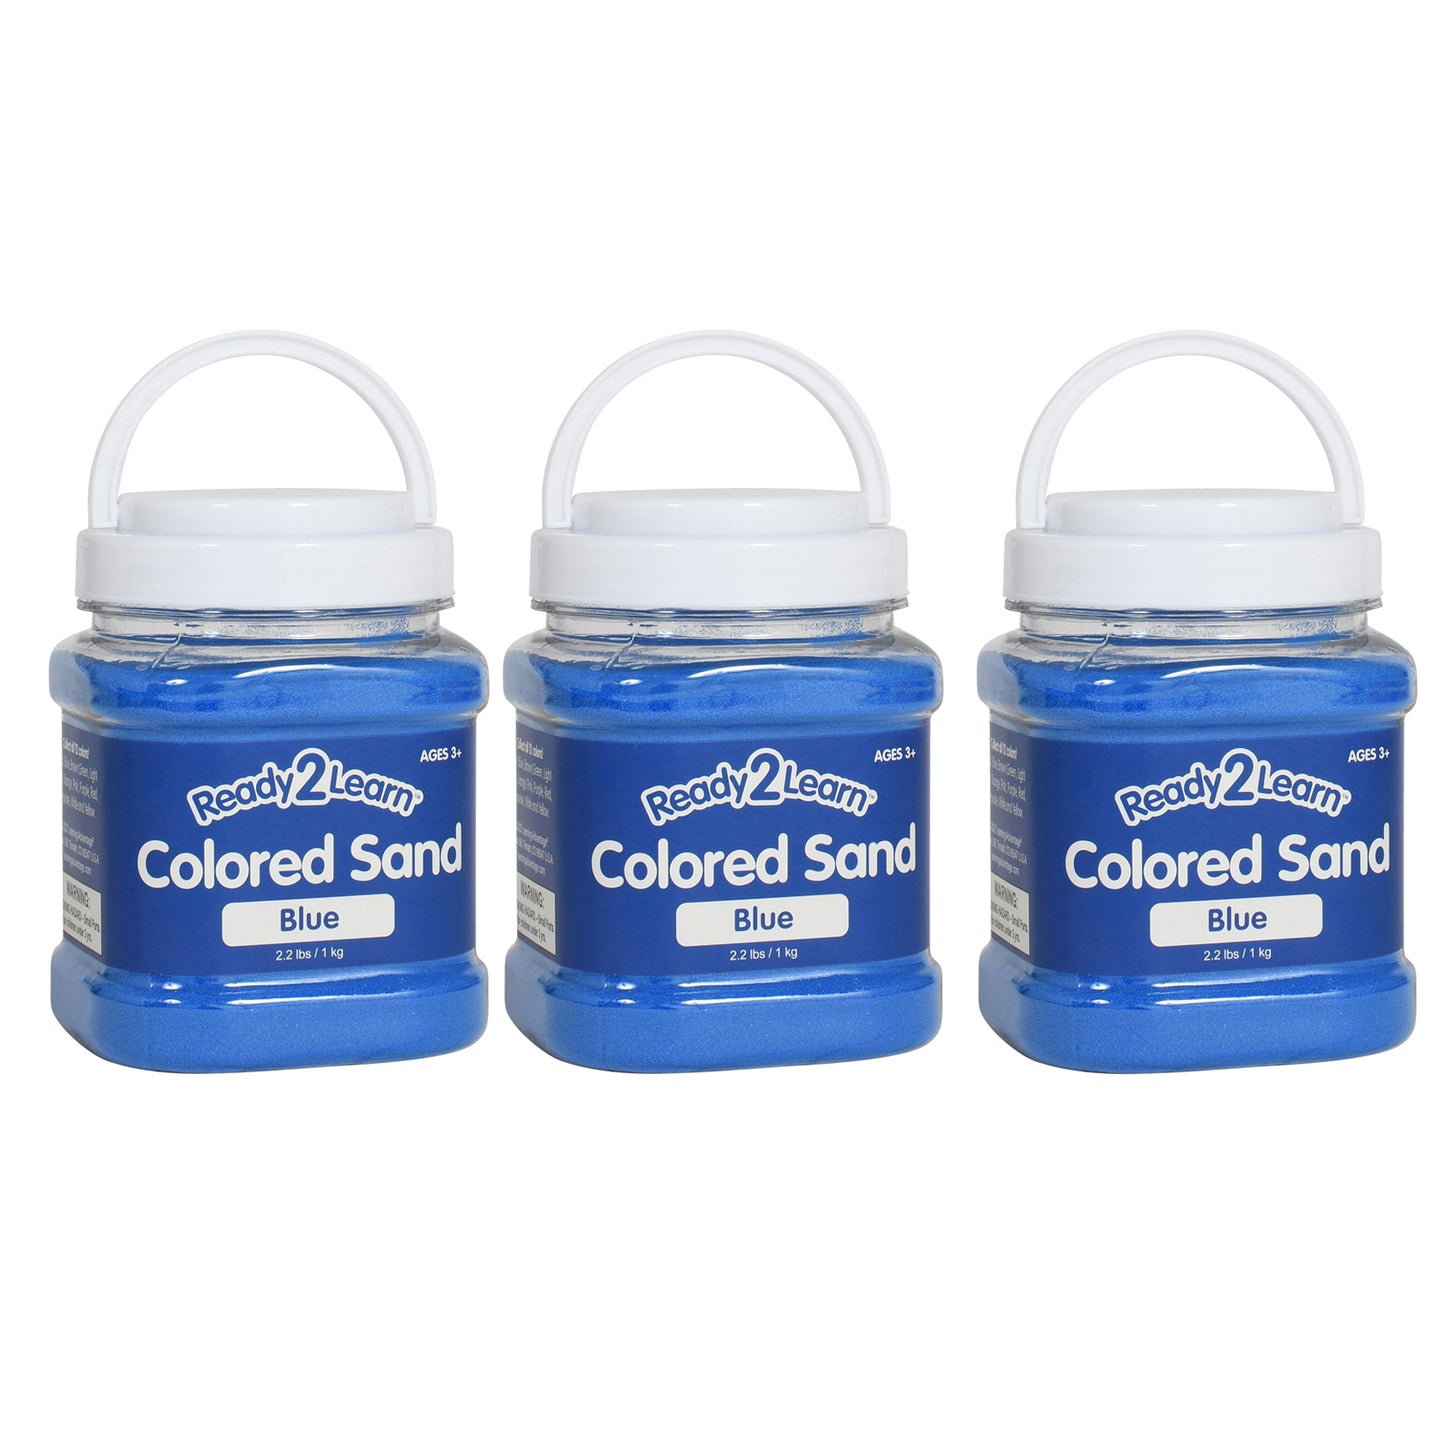 Colored Sand - Blue - 2.2 lb. Jar - Pack of 3